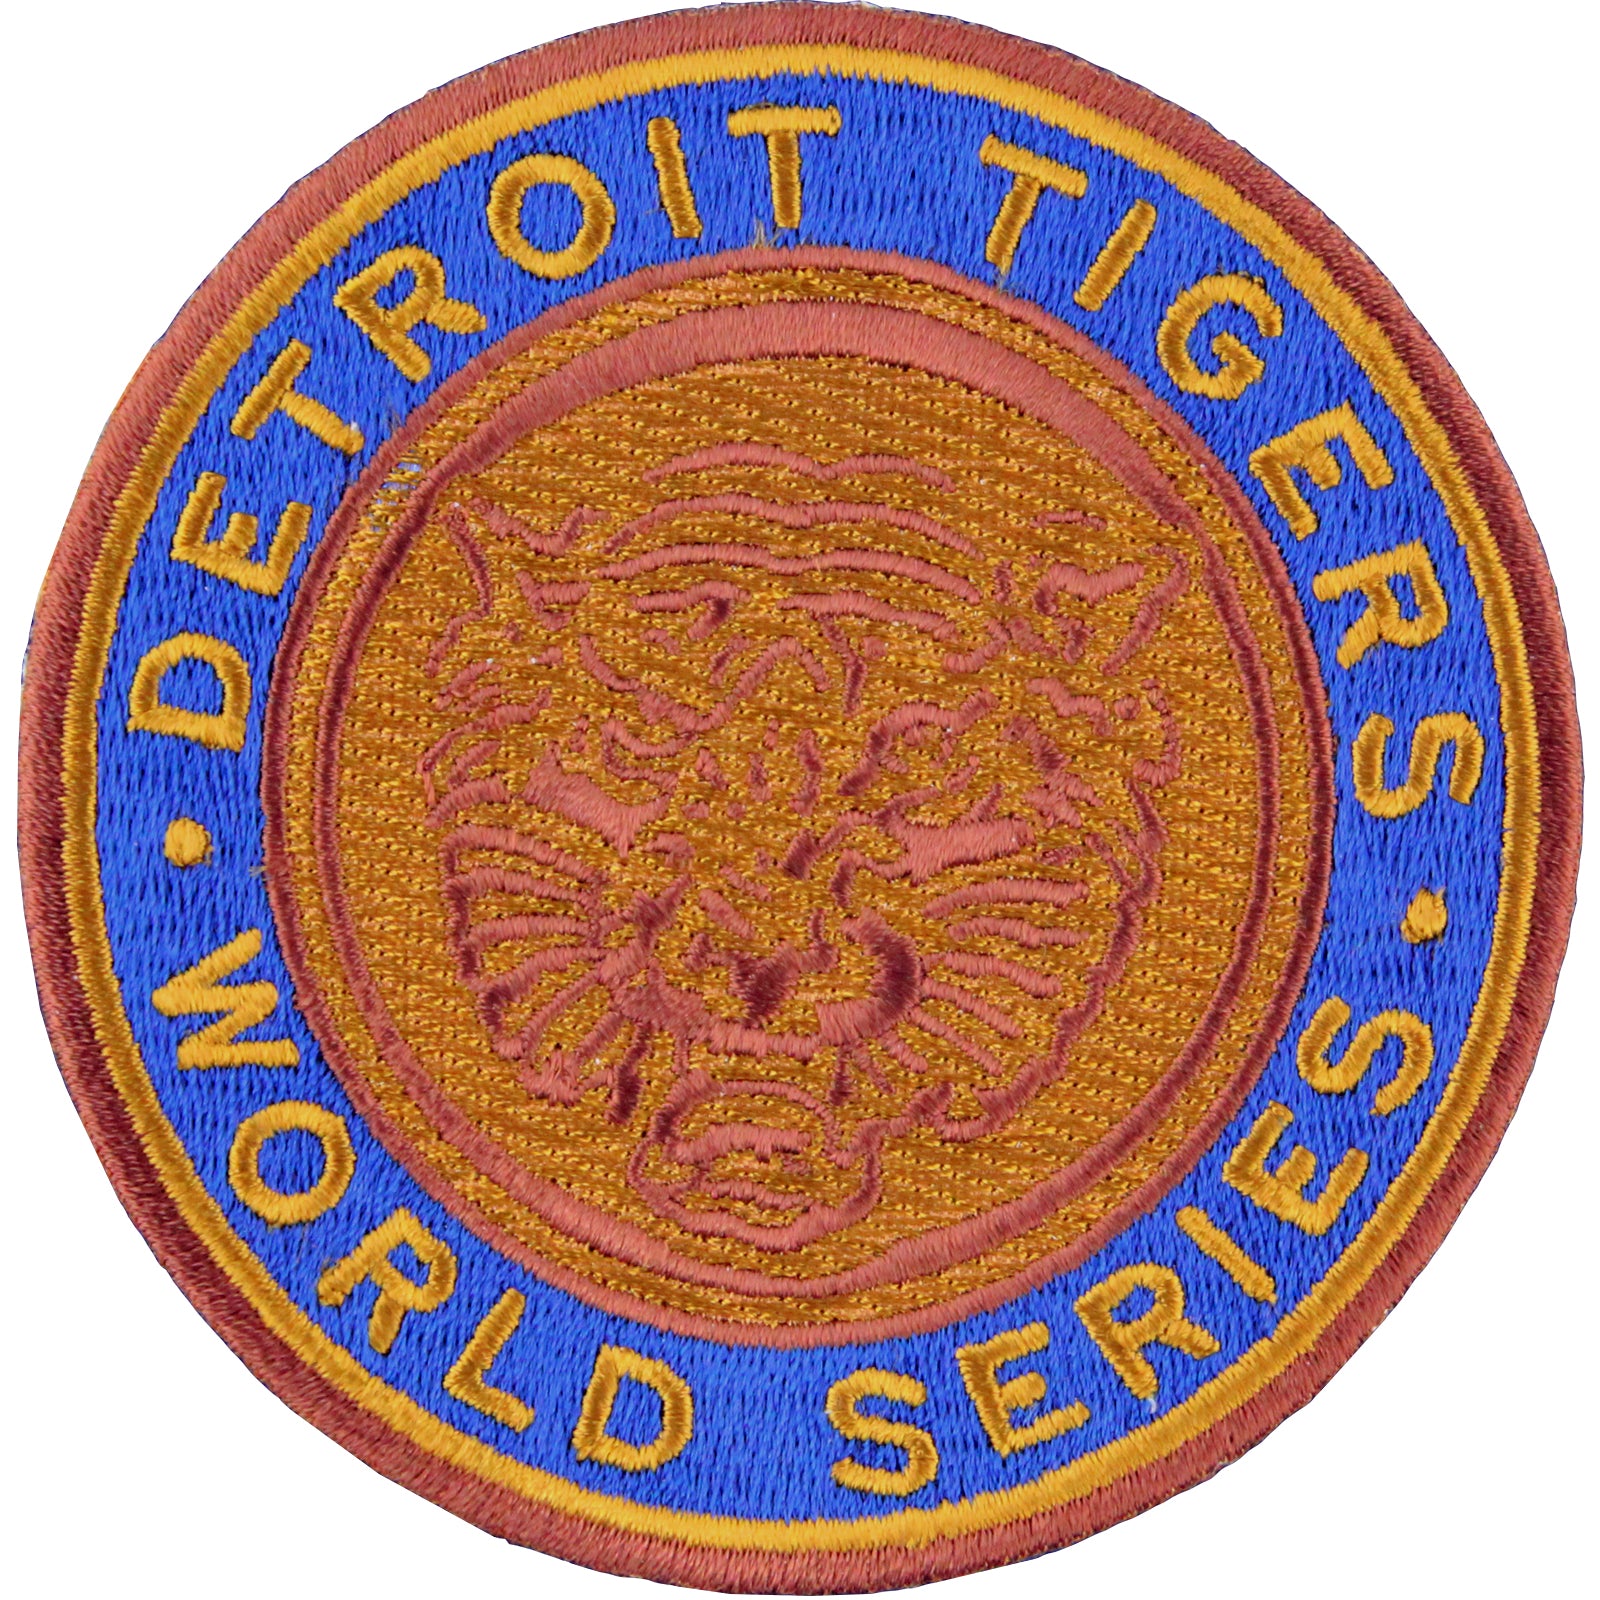 1968 detroit tigers jersey